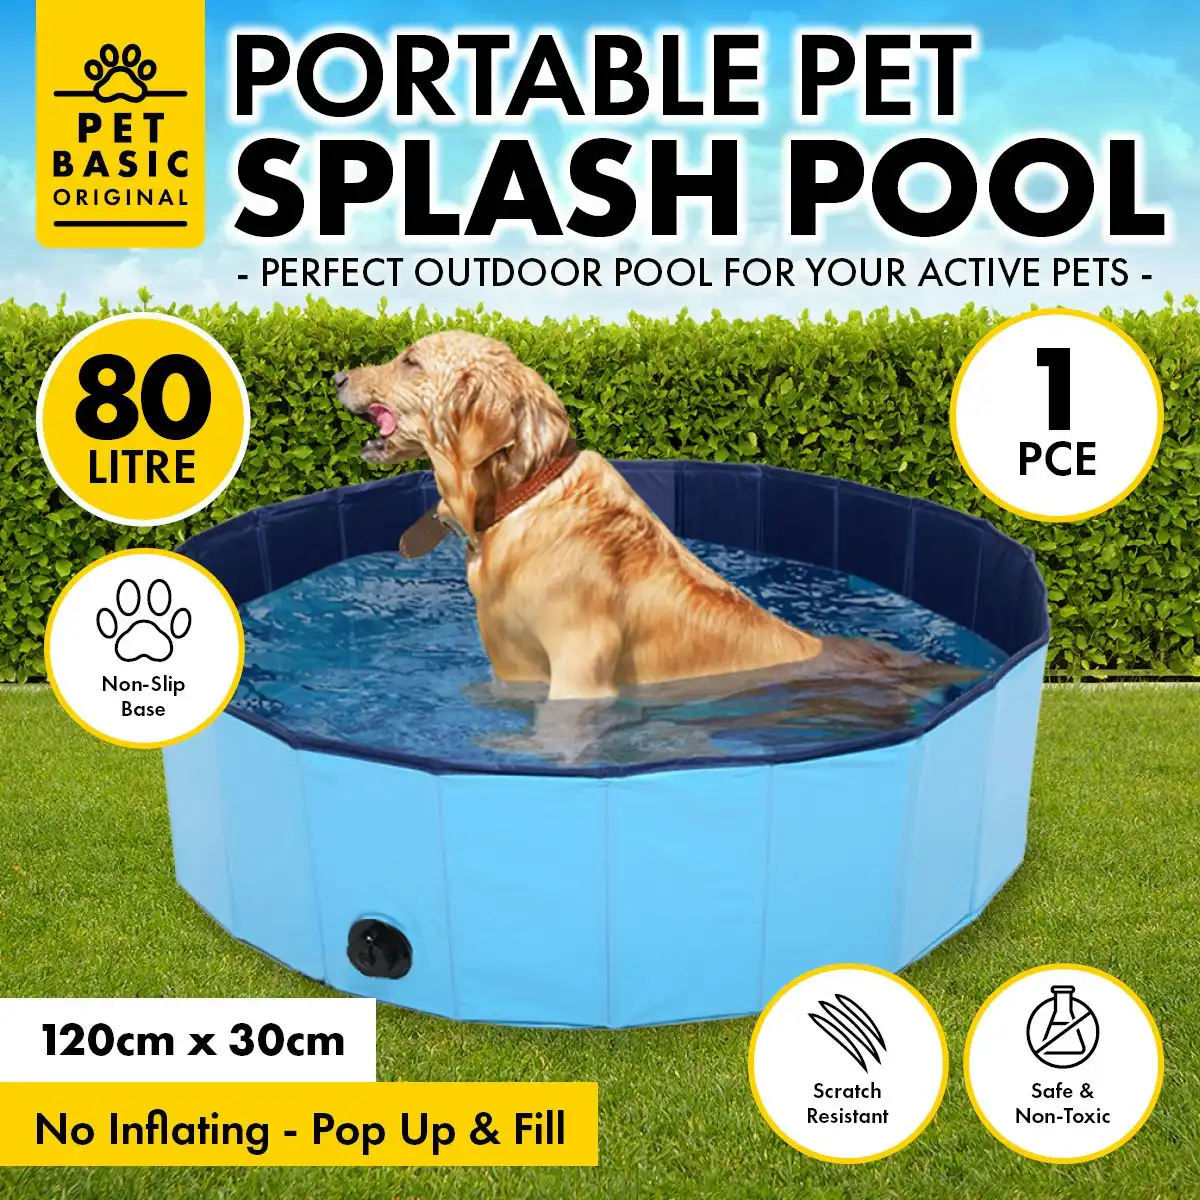 Pet Basic 80L Pet Pool Collapsible Portable Non-Slip Base High Quality 120cm